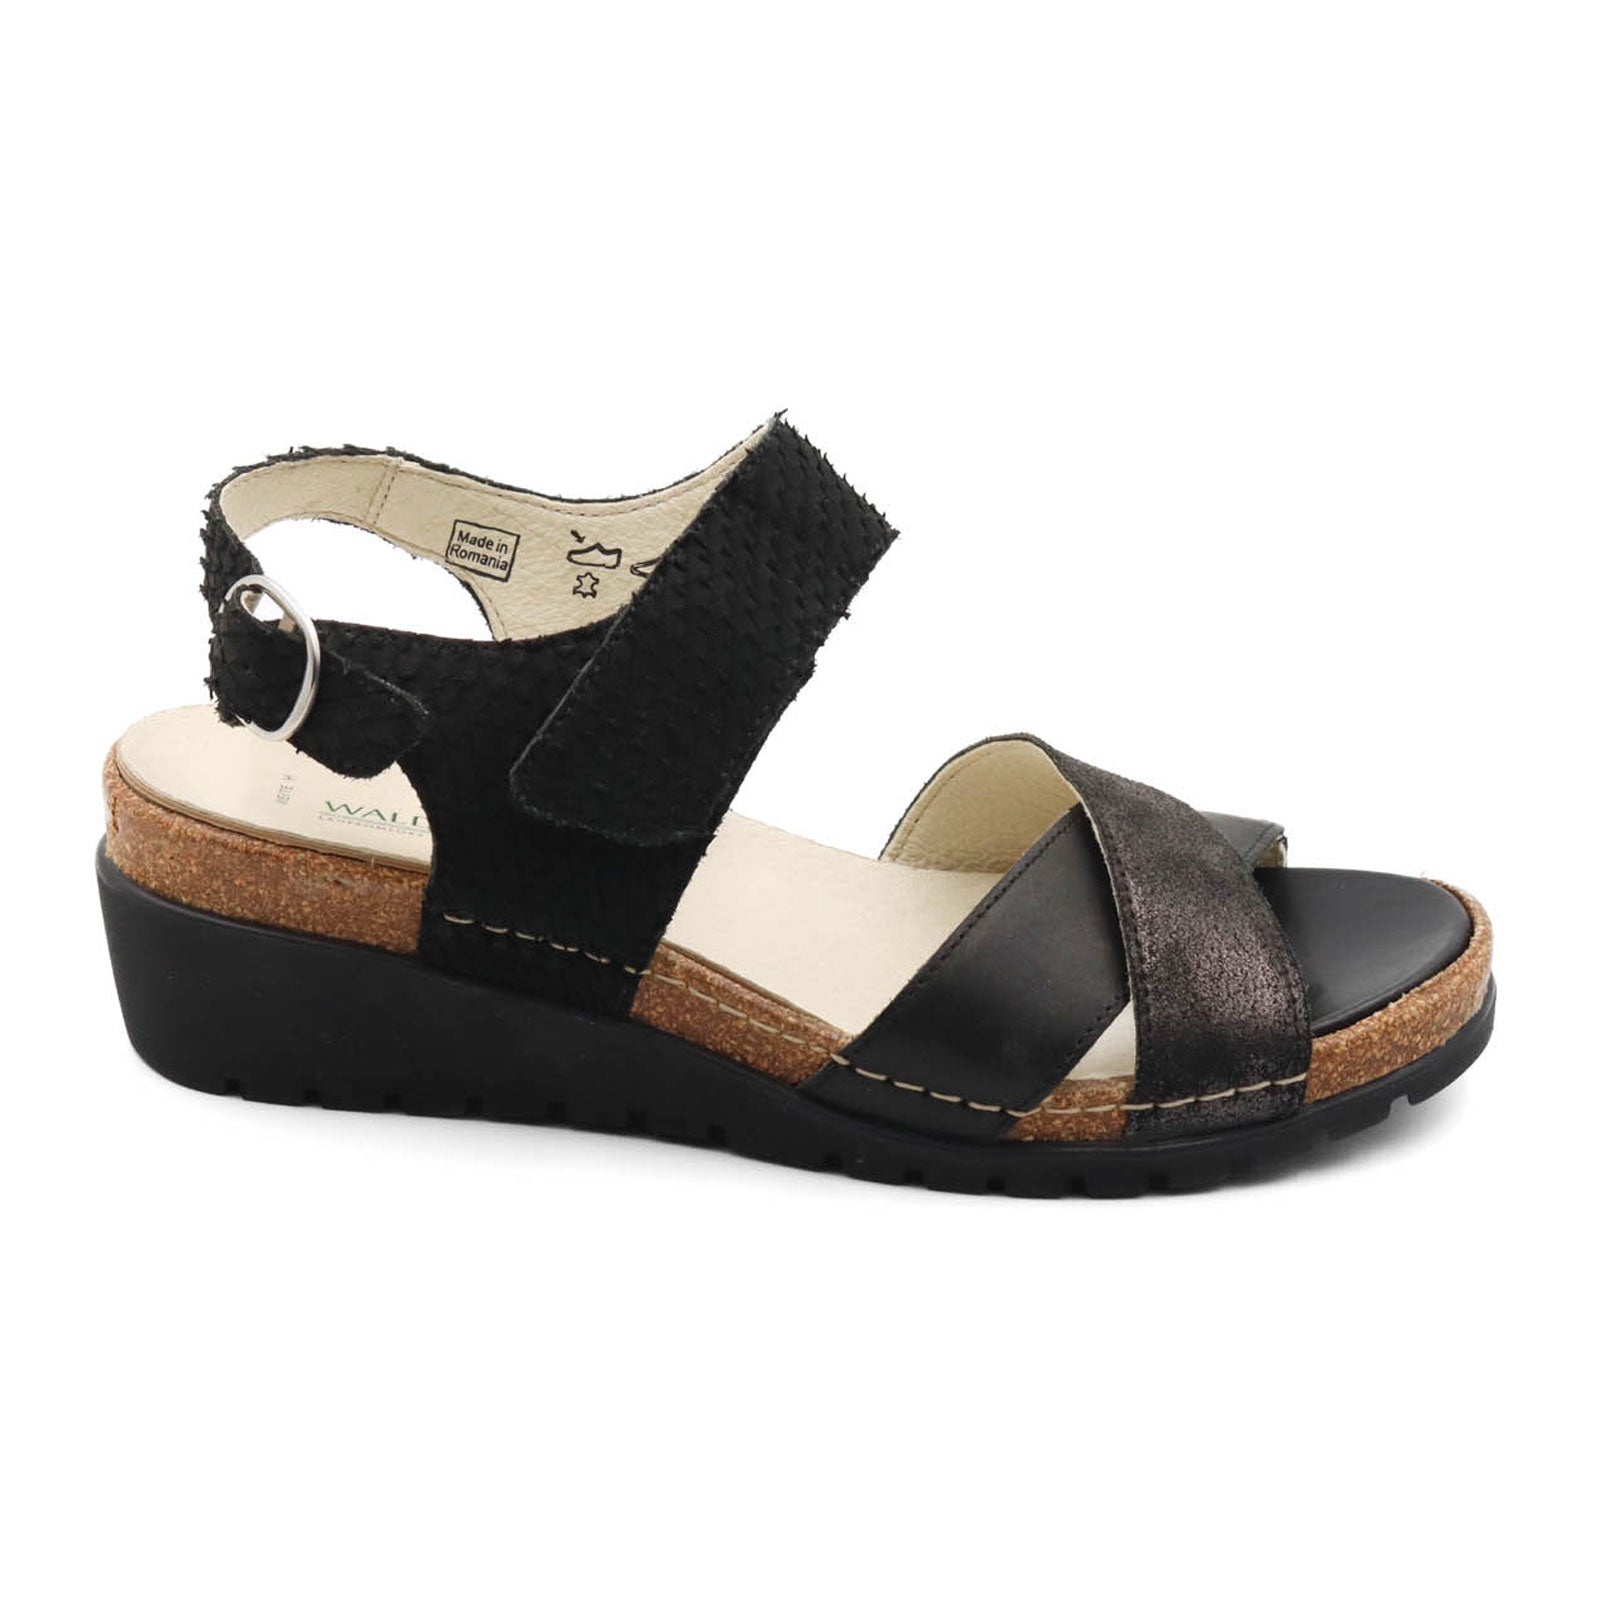 Waldlaufer Fiona 376007 Wedge Sandal (Women) - Black Combi - The Heel ...